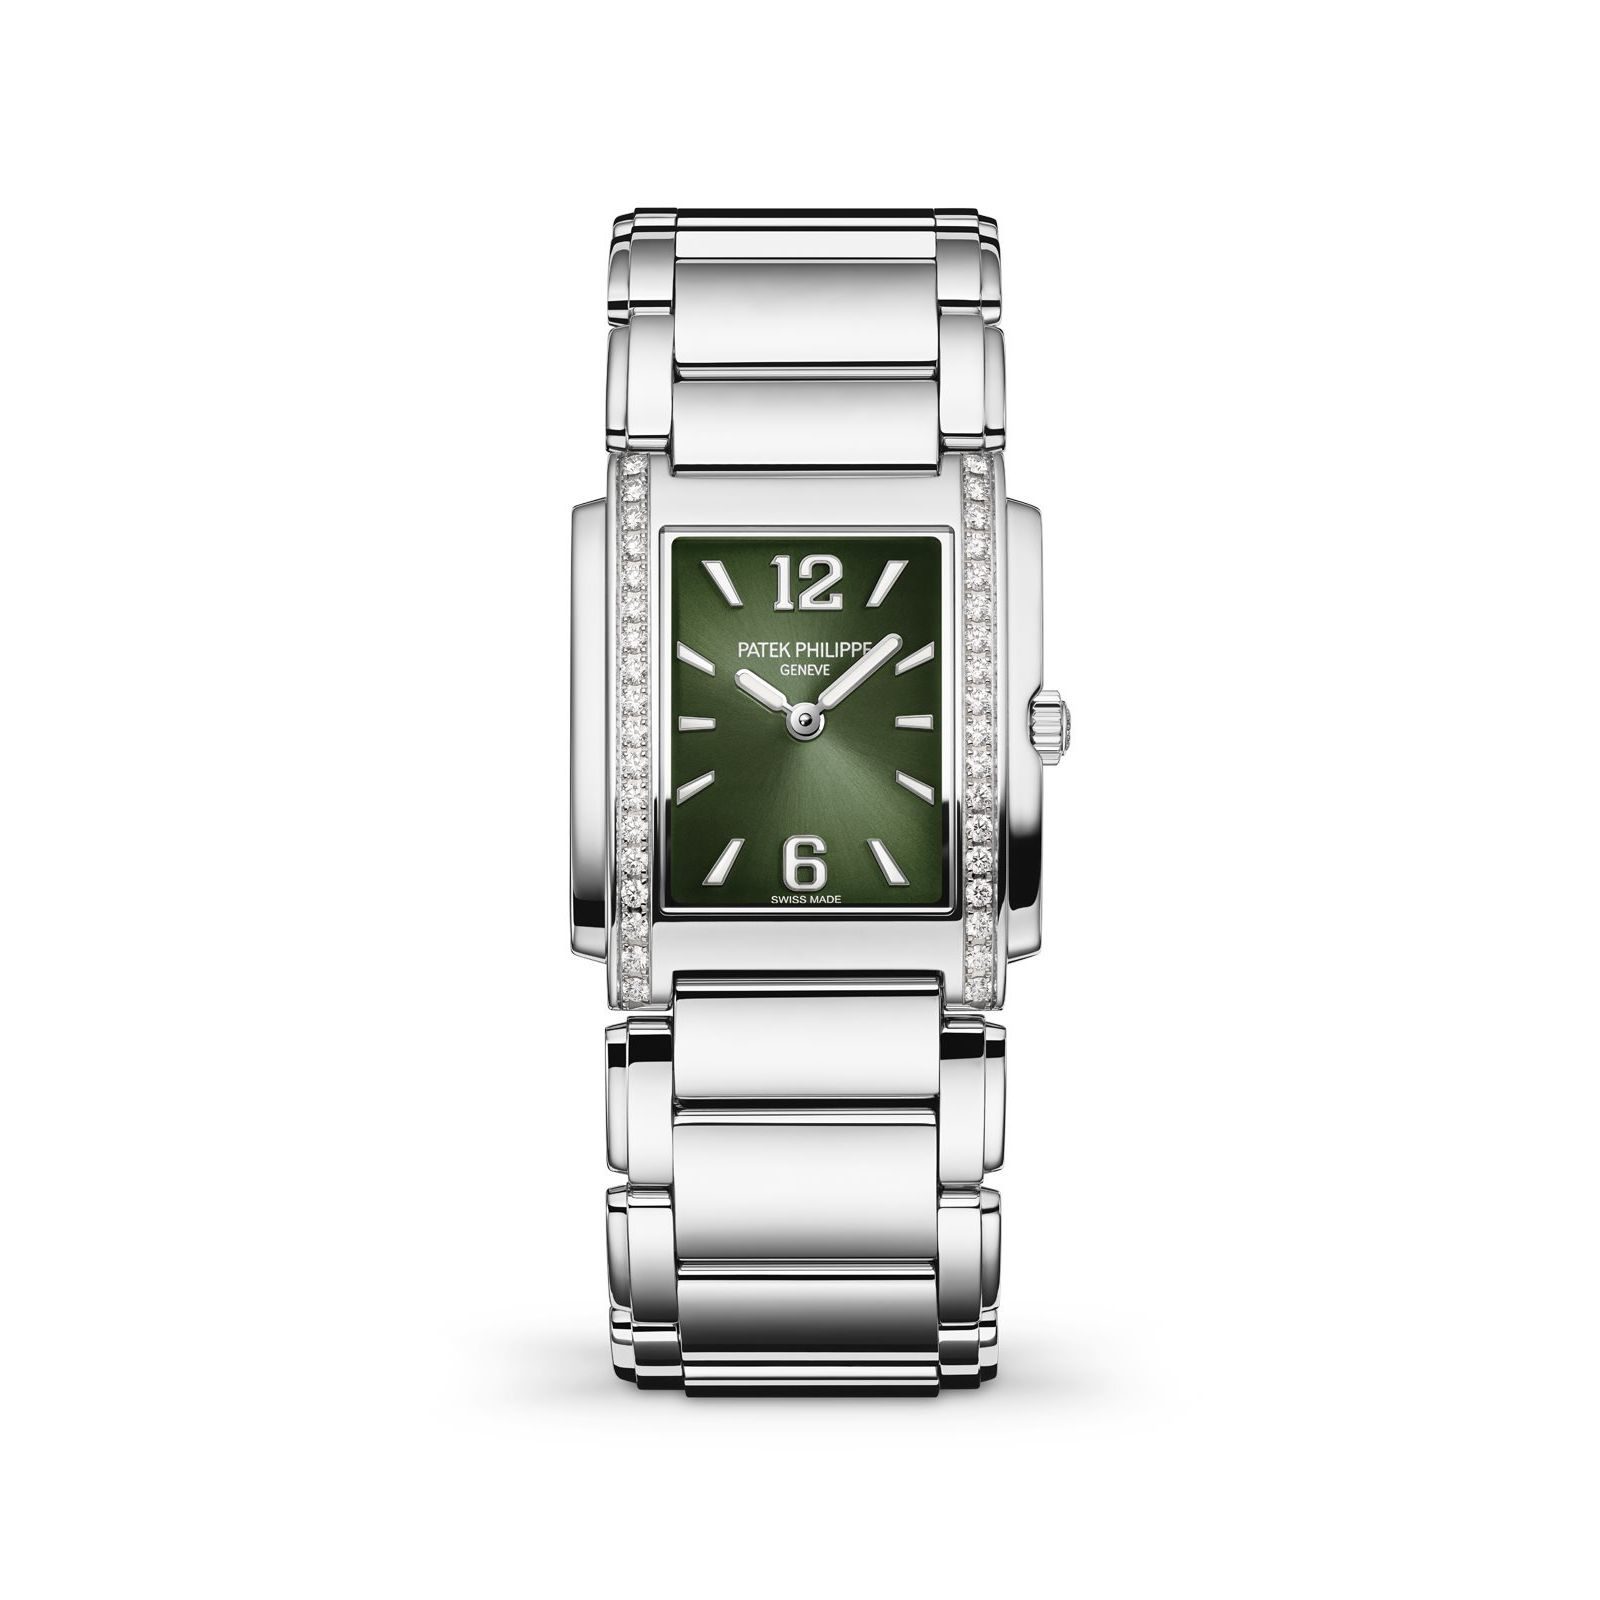 Bảng giá đồng hồ Patek Philippe chính hãng mới nhất 2022 E3B99D14-EA1E-4305-9944-66E4E7570E29